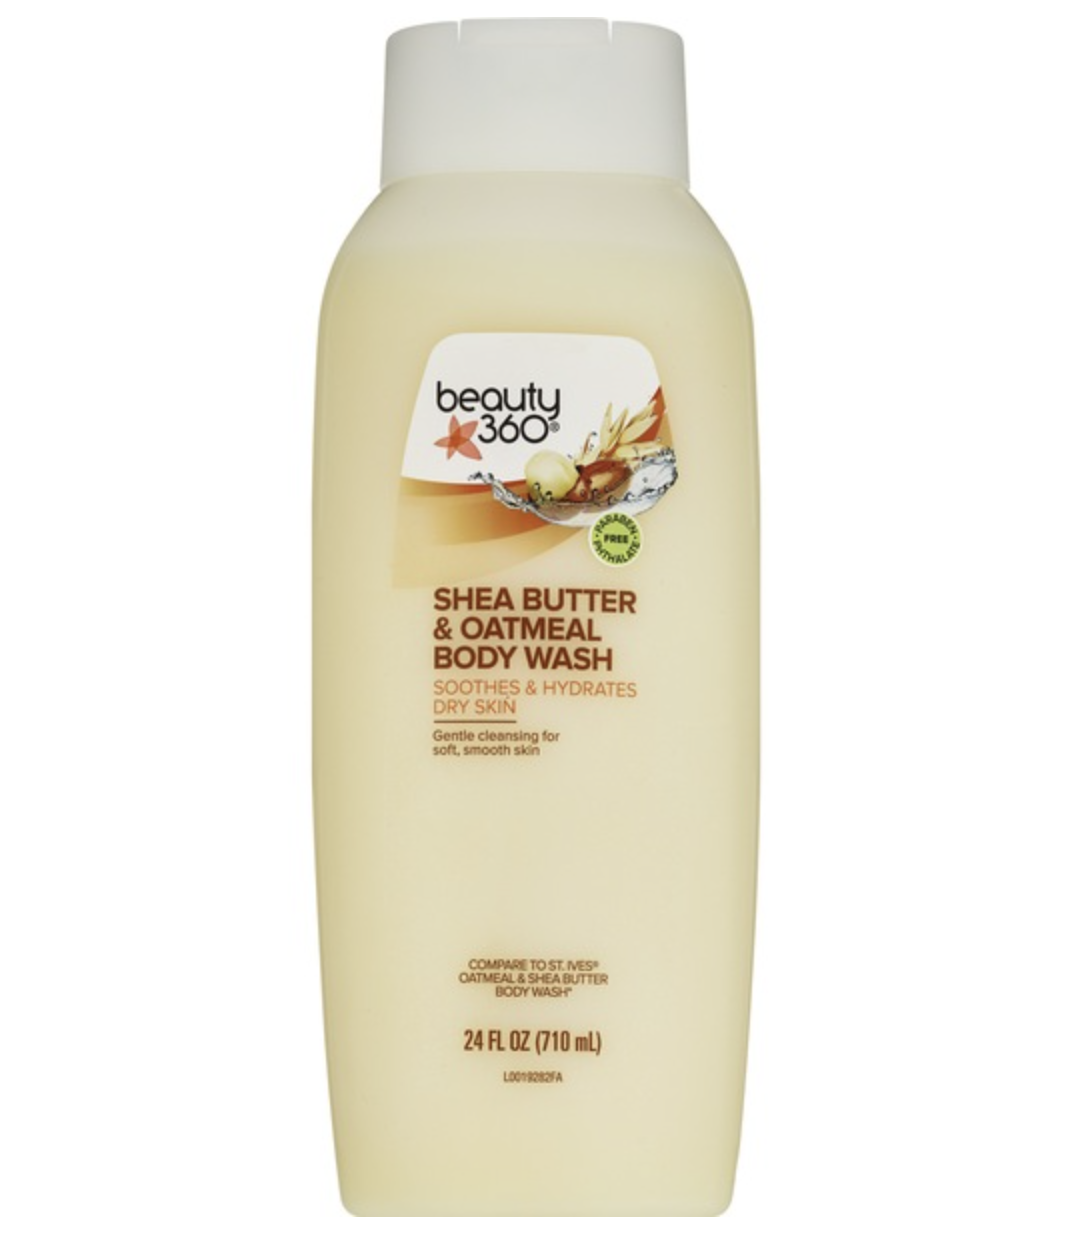 Beauty 360 shea butter and oatmeal body wash